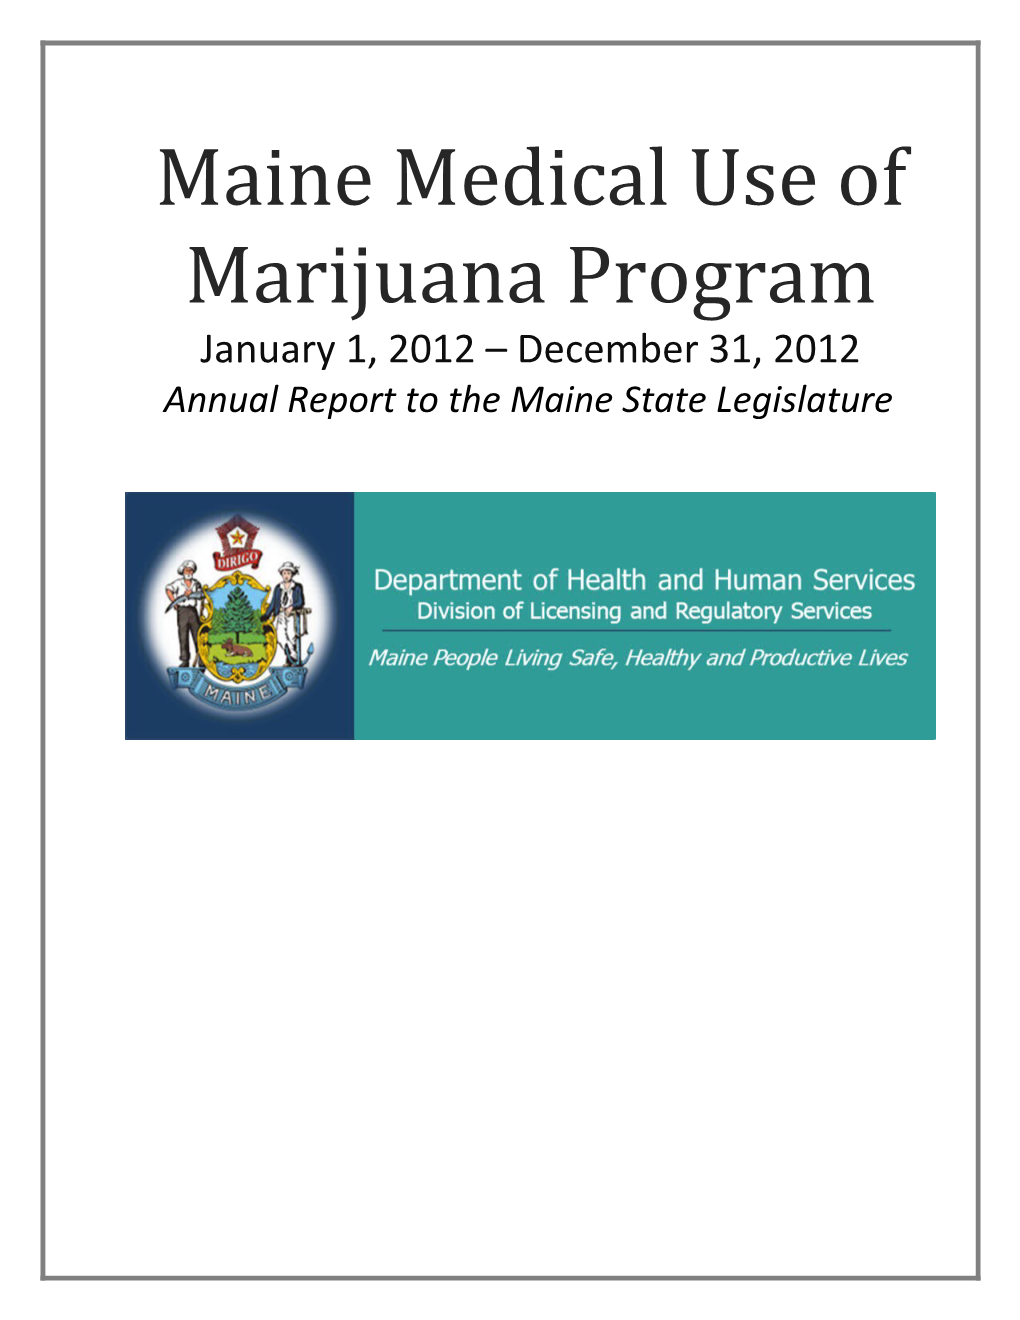 Maine Medical Use of Marijuana Program